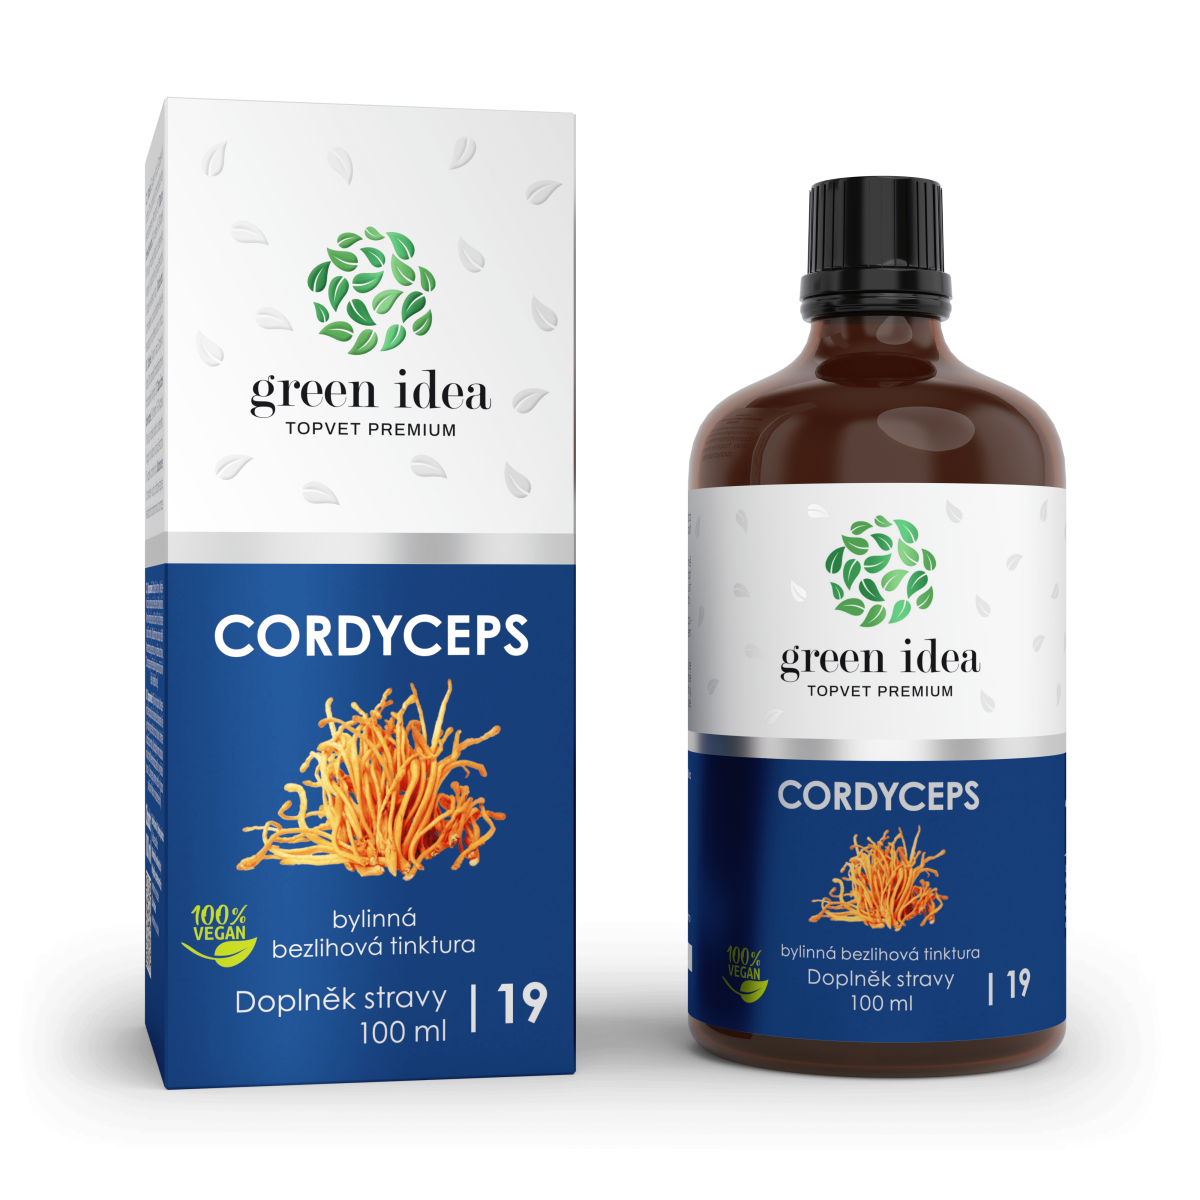 Cordyceps - alcohol-free tincture